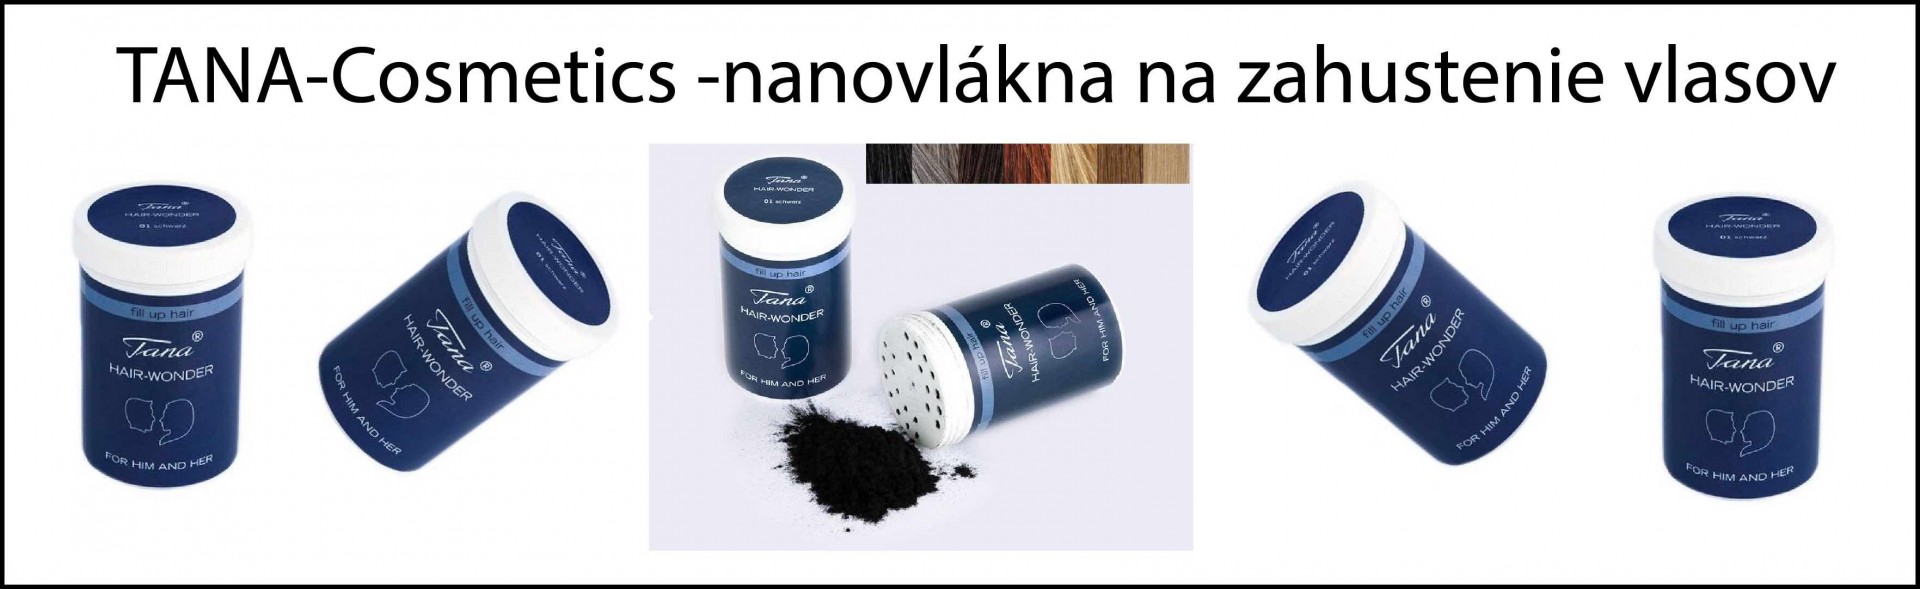 Tana-Cosmetics, nano vlakna za zahustovanie vlasov